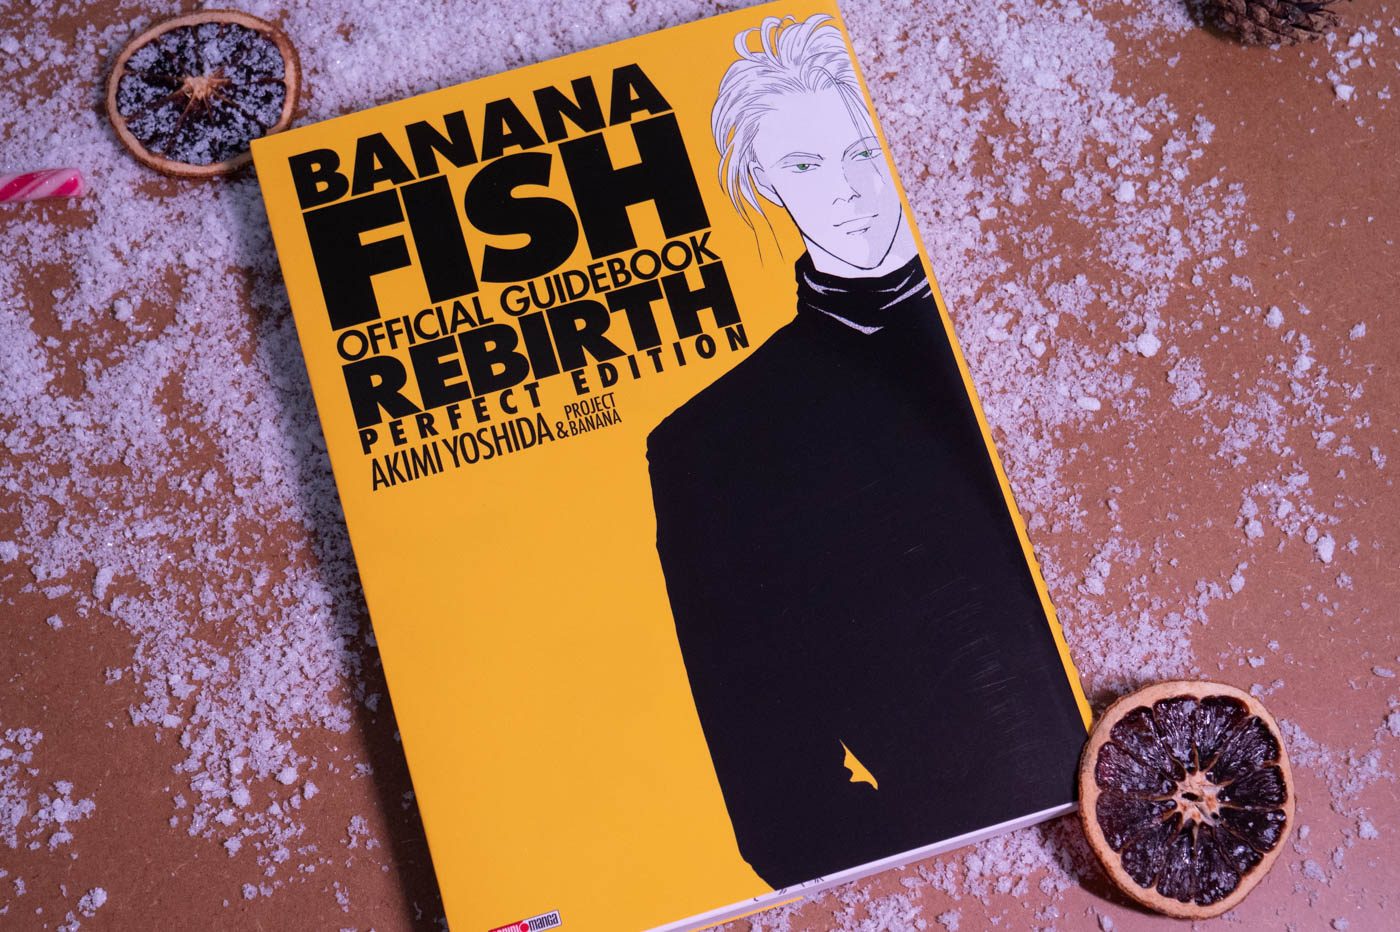 Beaux livres banana fish